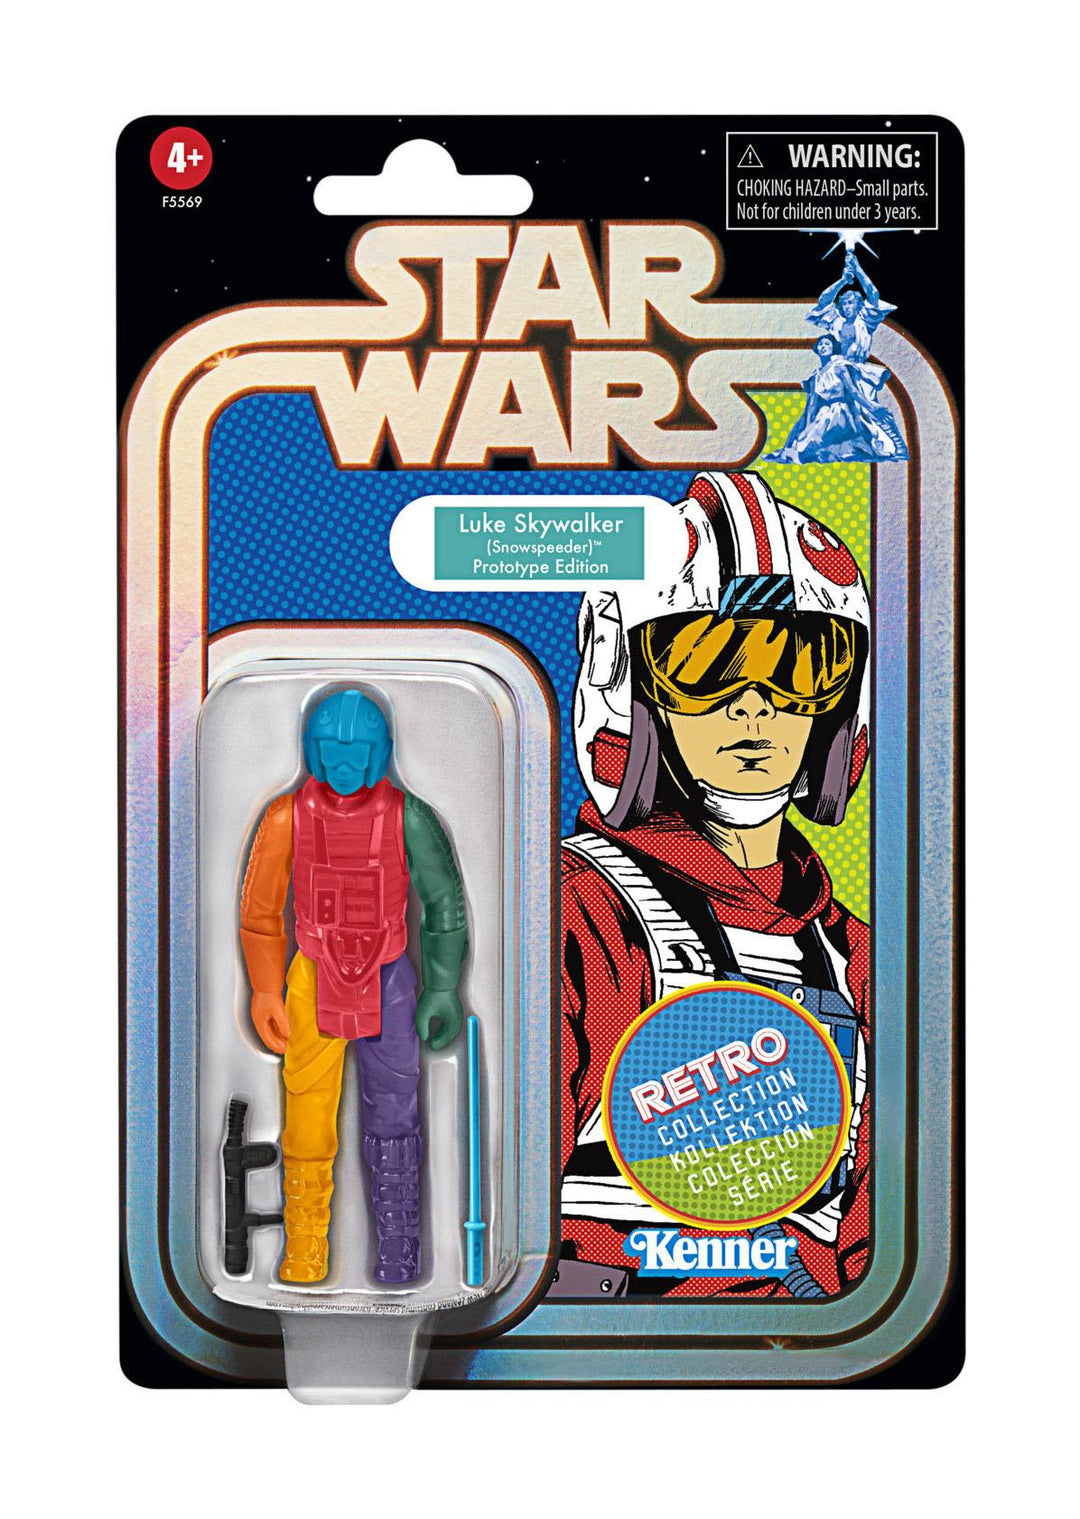 Hasbro Star Wars Retro Collection Luke Skywalker (Snowspeeder) Prototype Edition